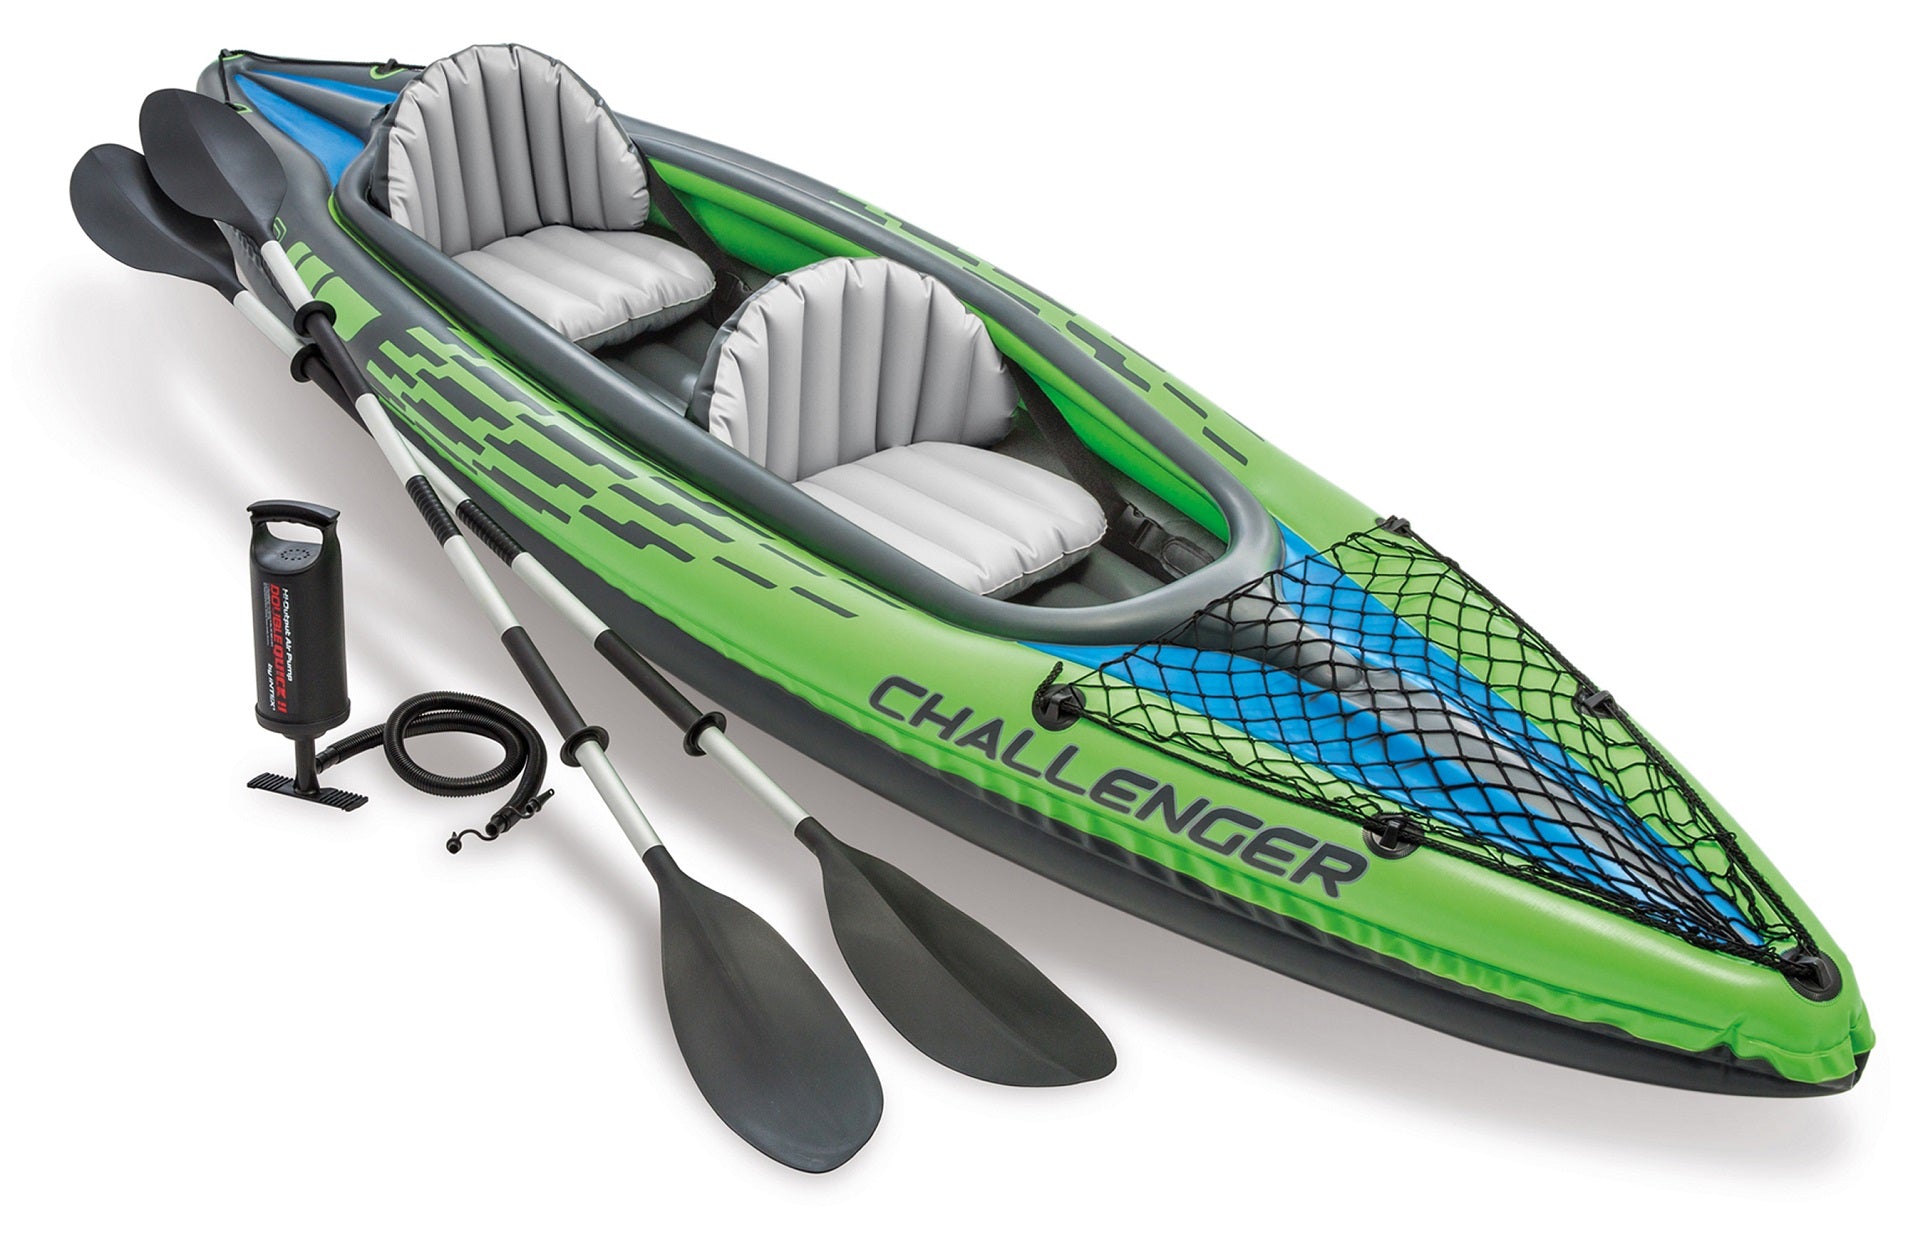 Intex Challenger K2 Kayak 2 Person Inflatable Kayak Set with Aluminum Oars